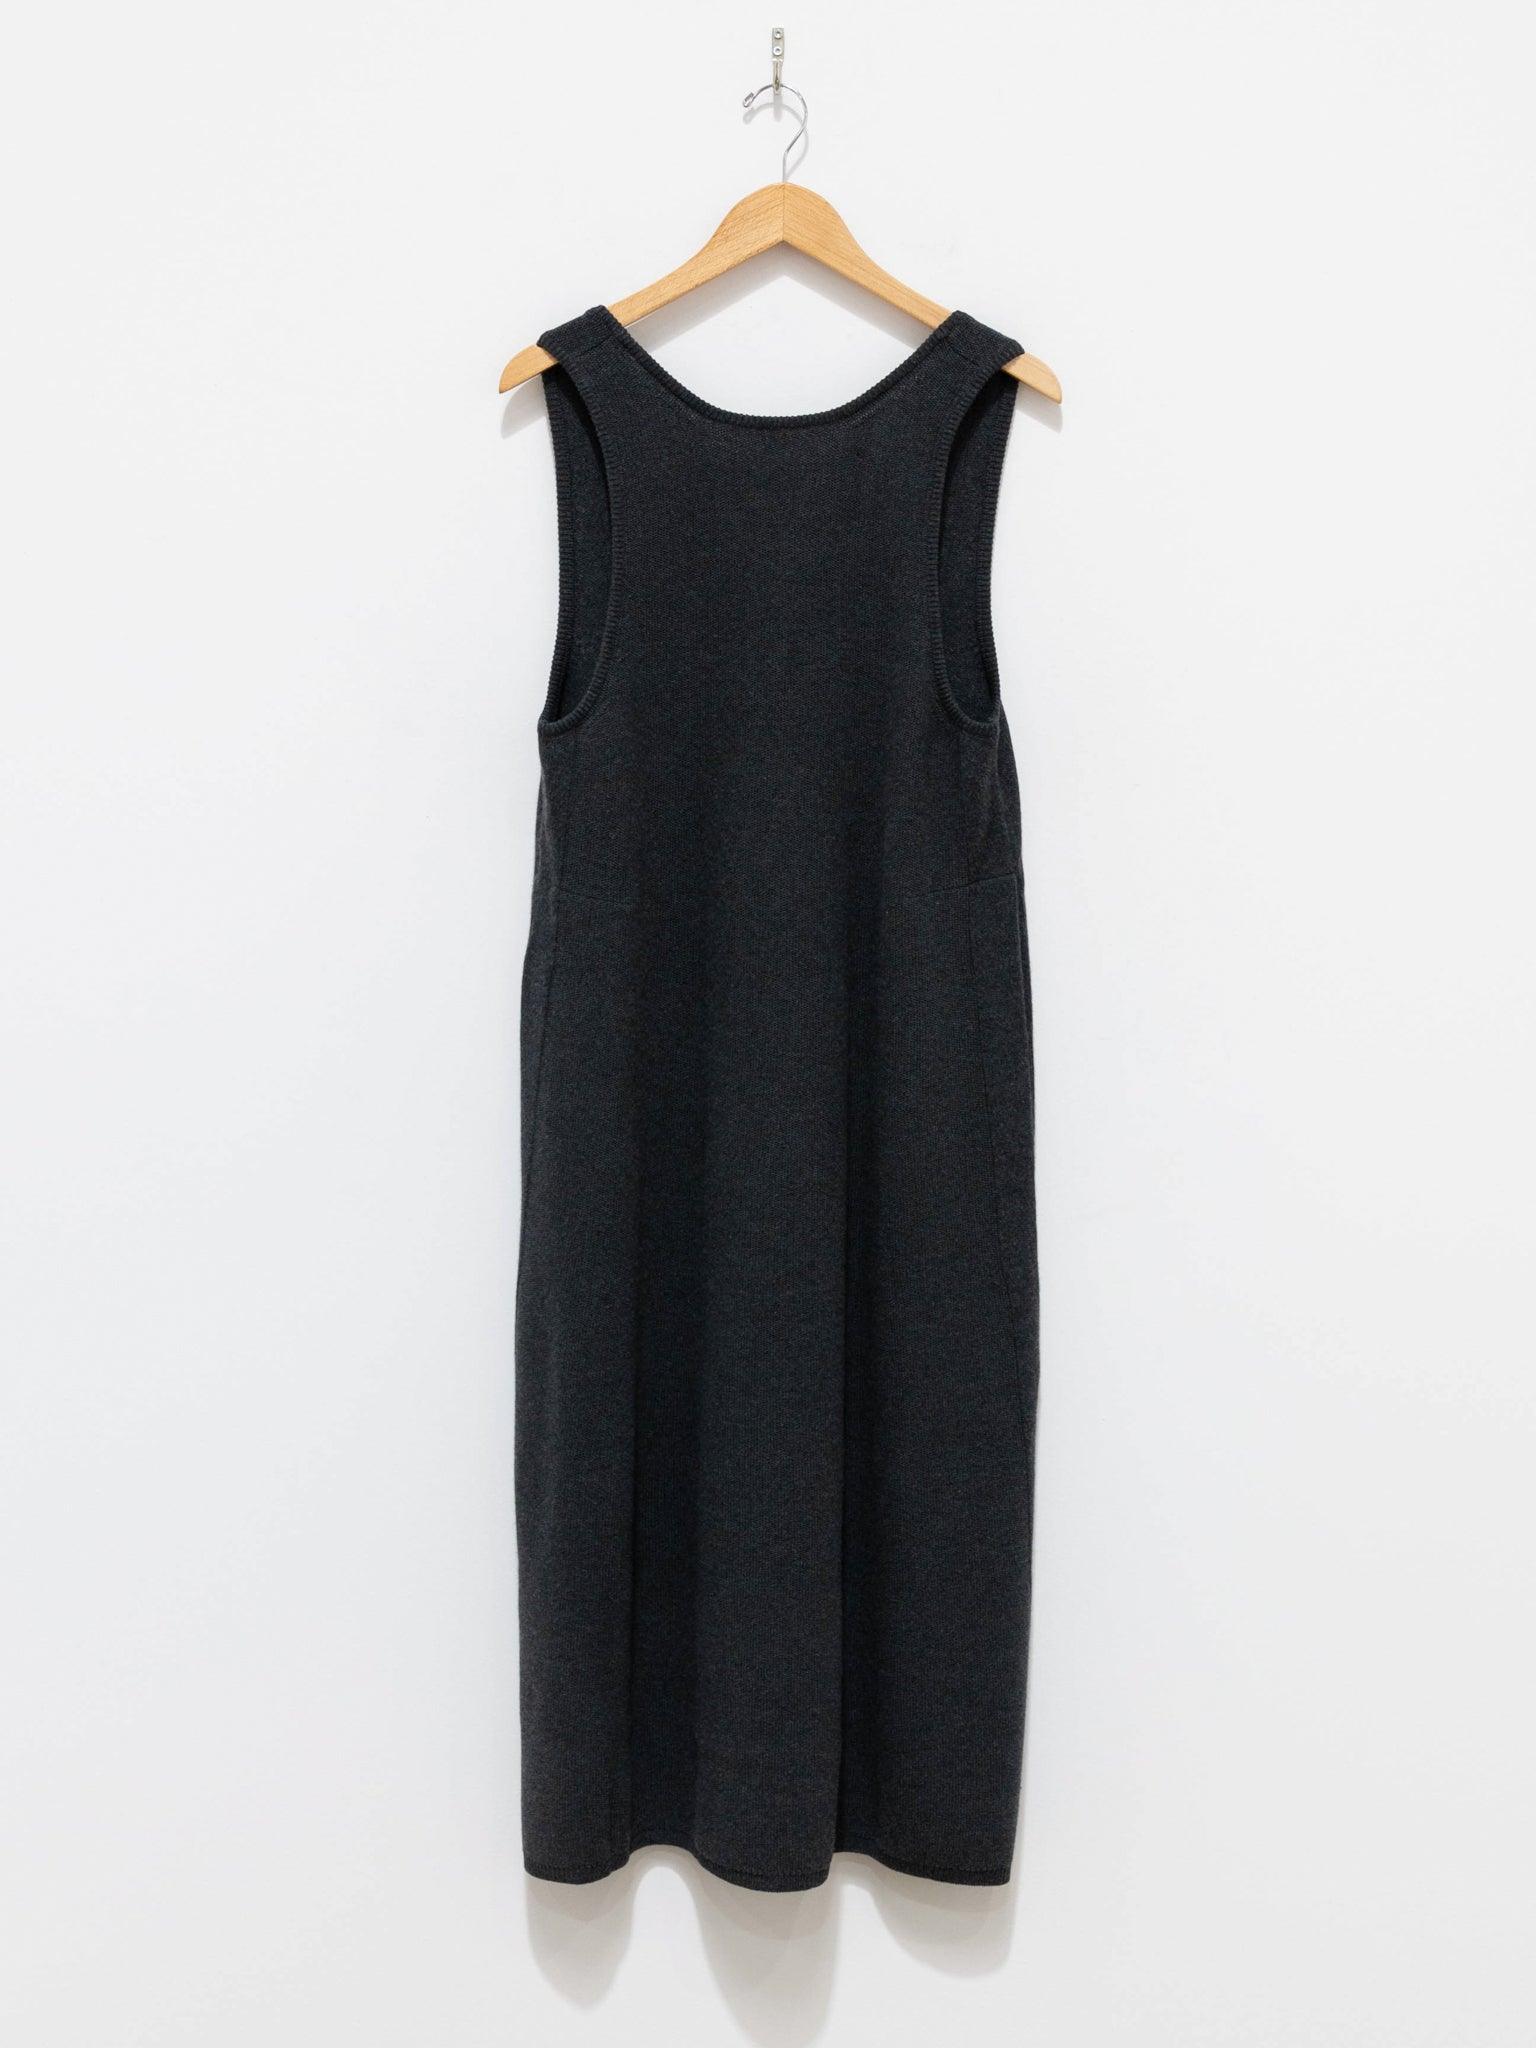 Namu Shop - Unfil Silk Wool Honeycomb Knit Dress - Charcoal